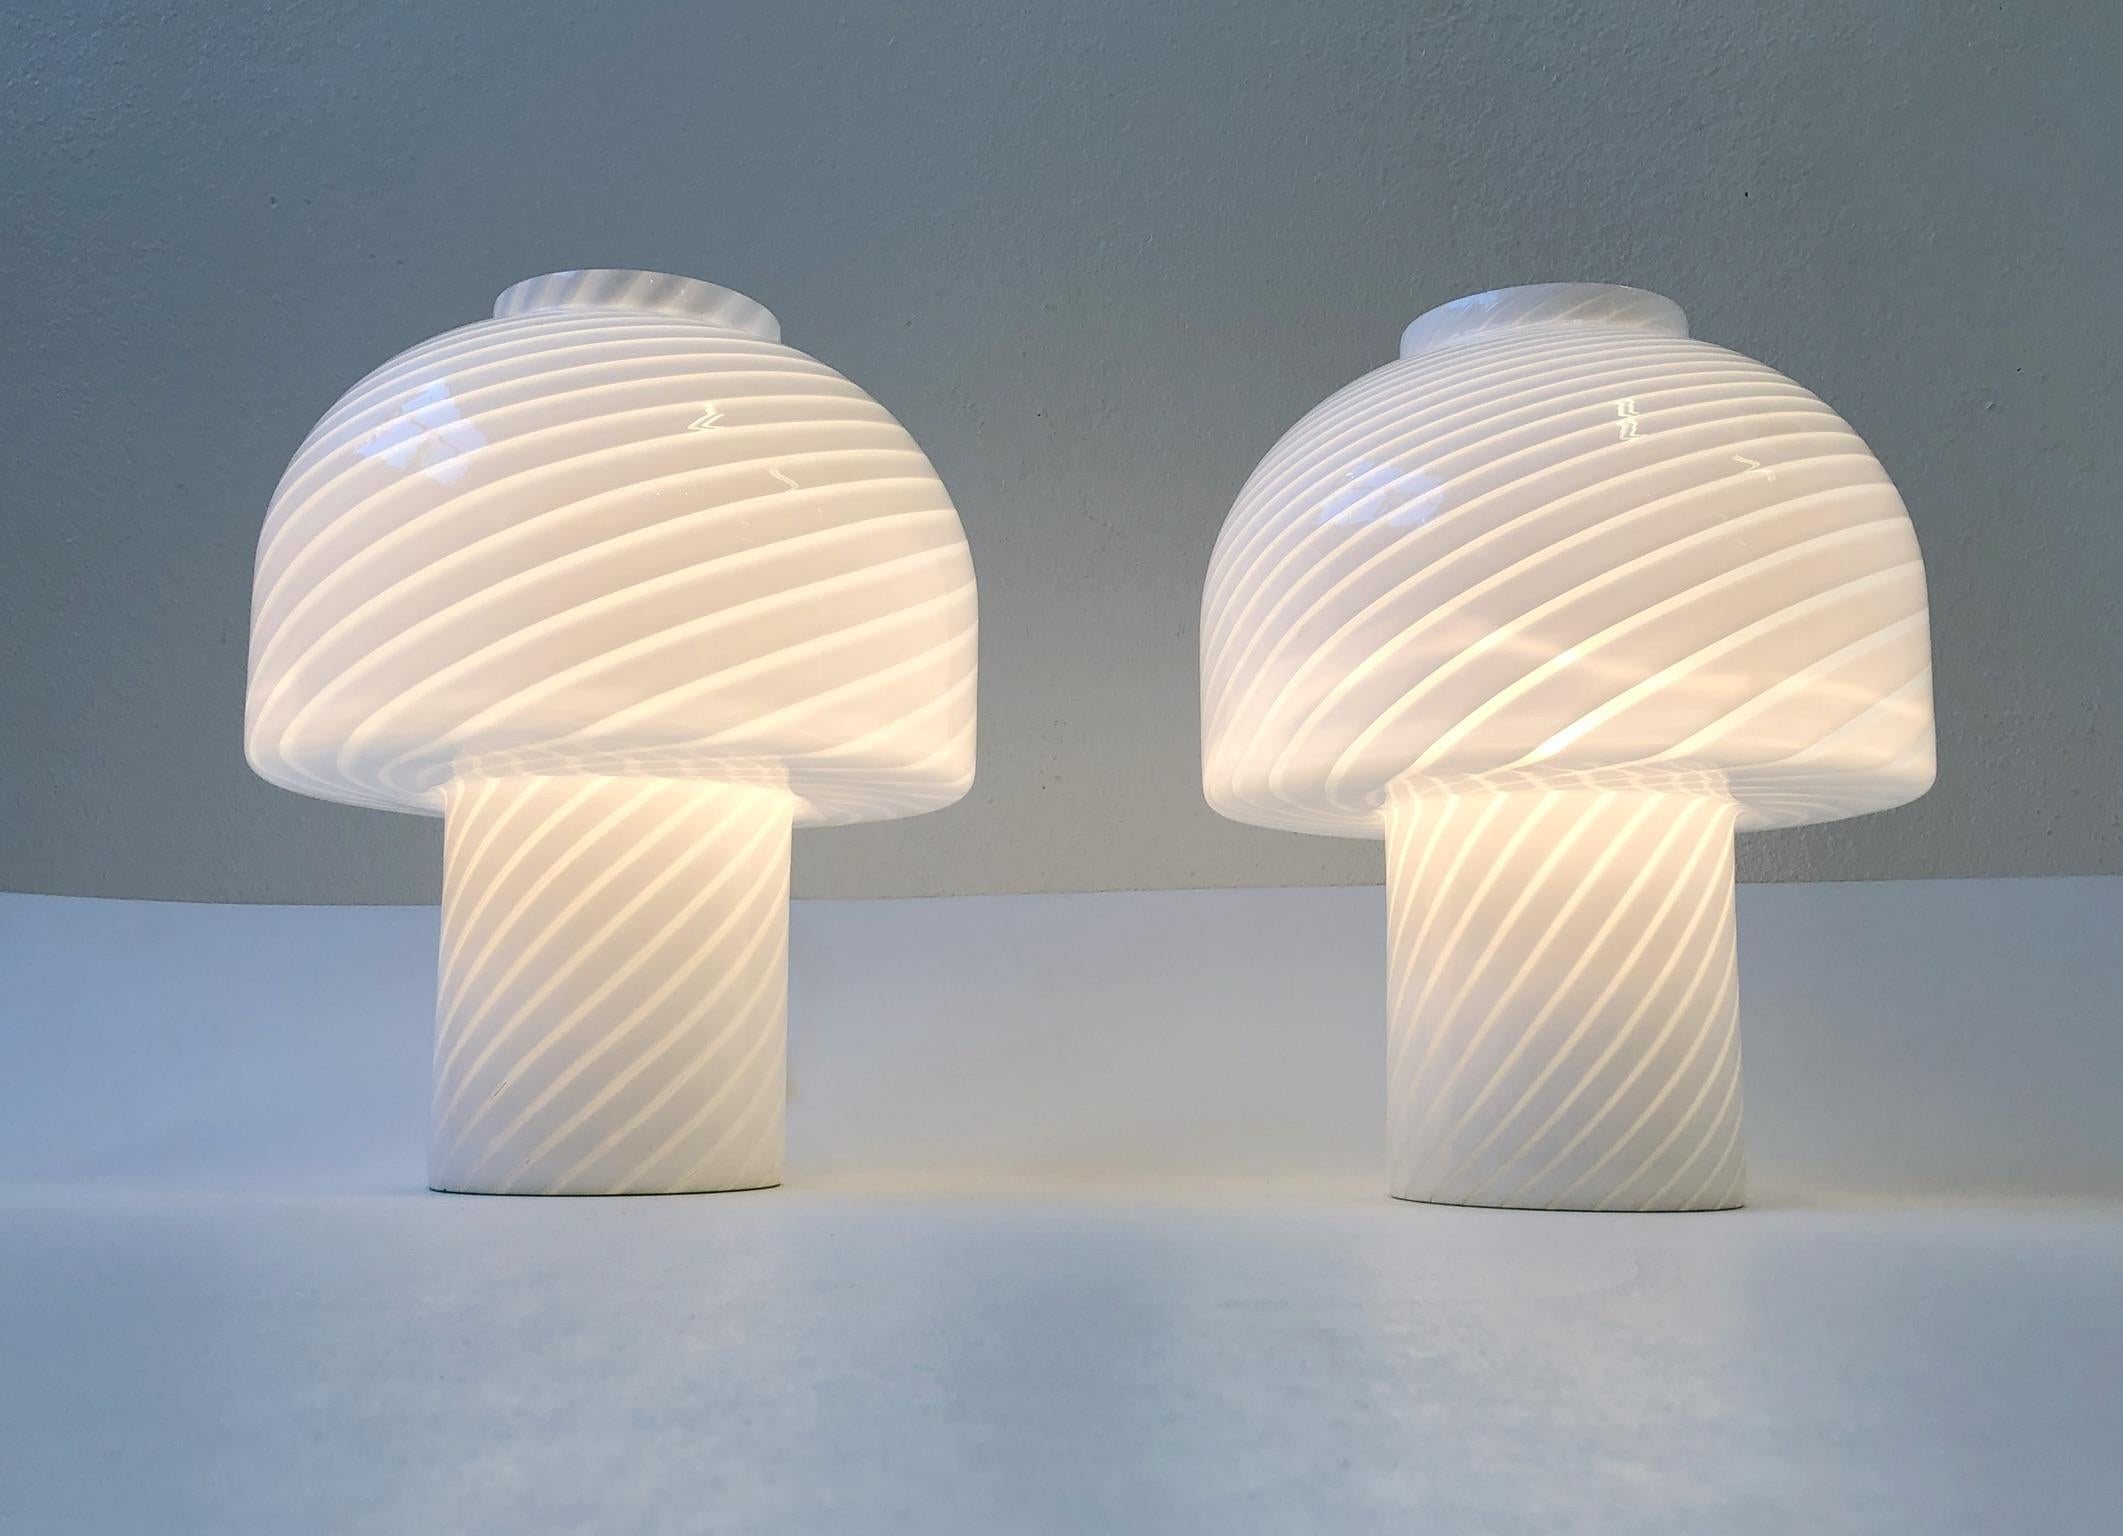 Pair of Italian Murano handblown glass table lamps design in the 1970s by Vetri Murano.
Dimensions: 13” diameter 16.5” high.